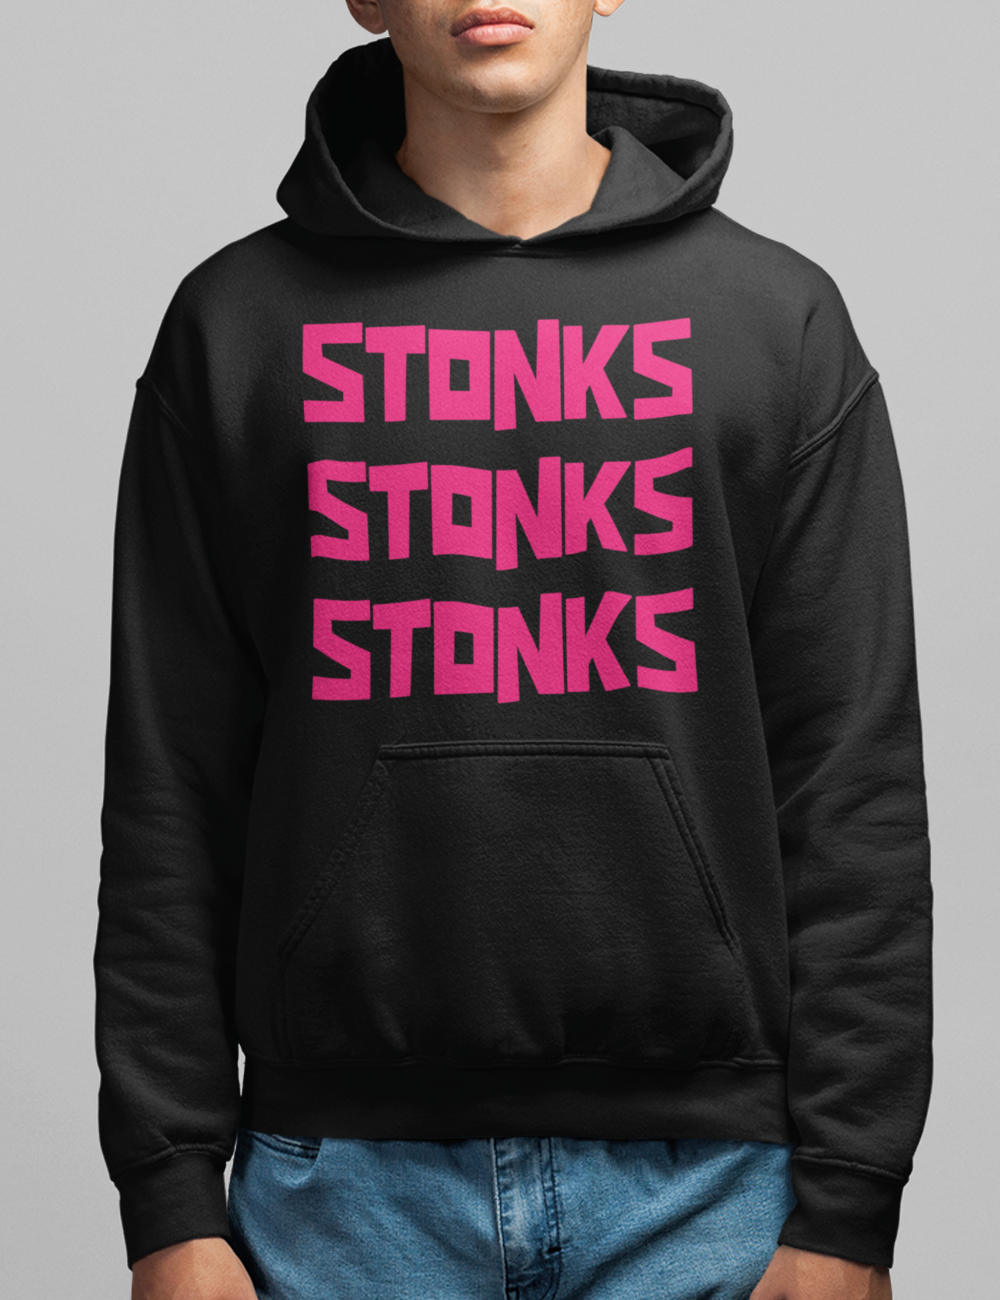 Stonks Stonks Stonks | Hoodie OniTakai